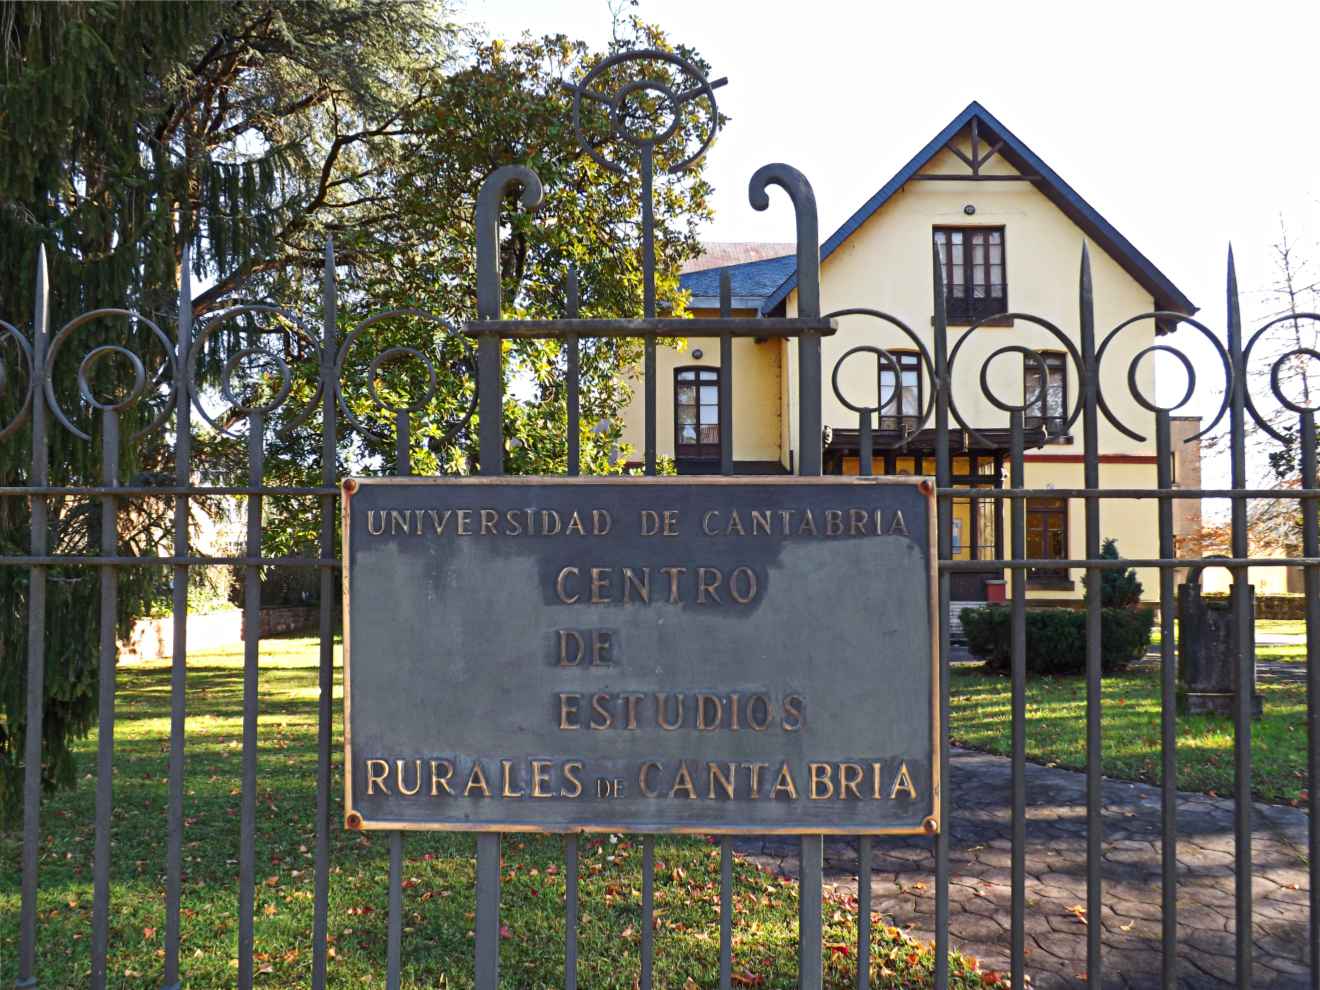 Centro de Estudios Rurales de Cantabria